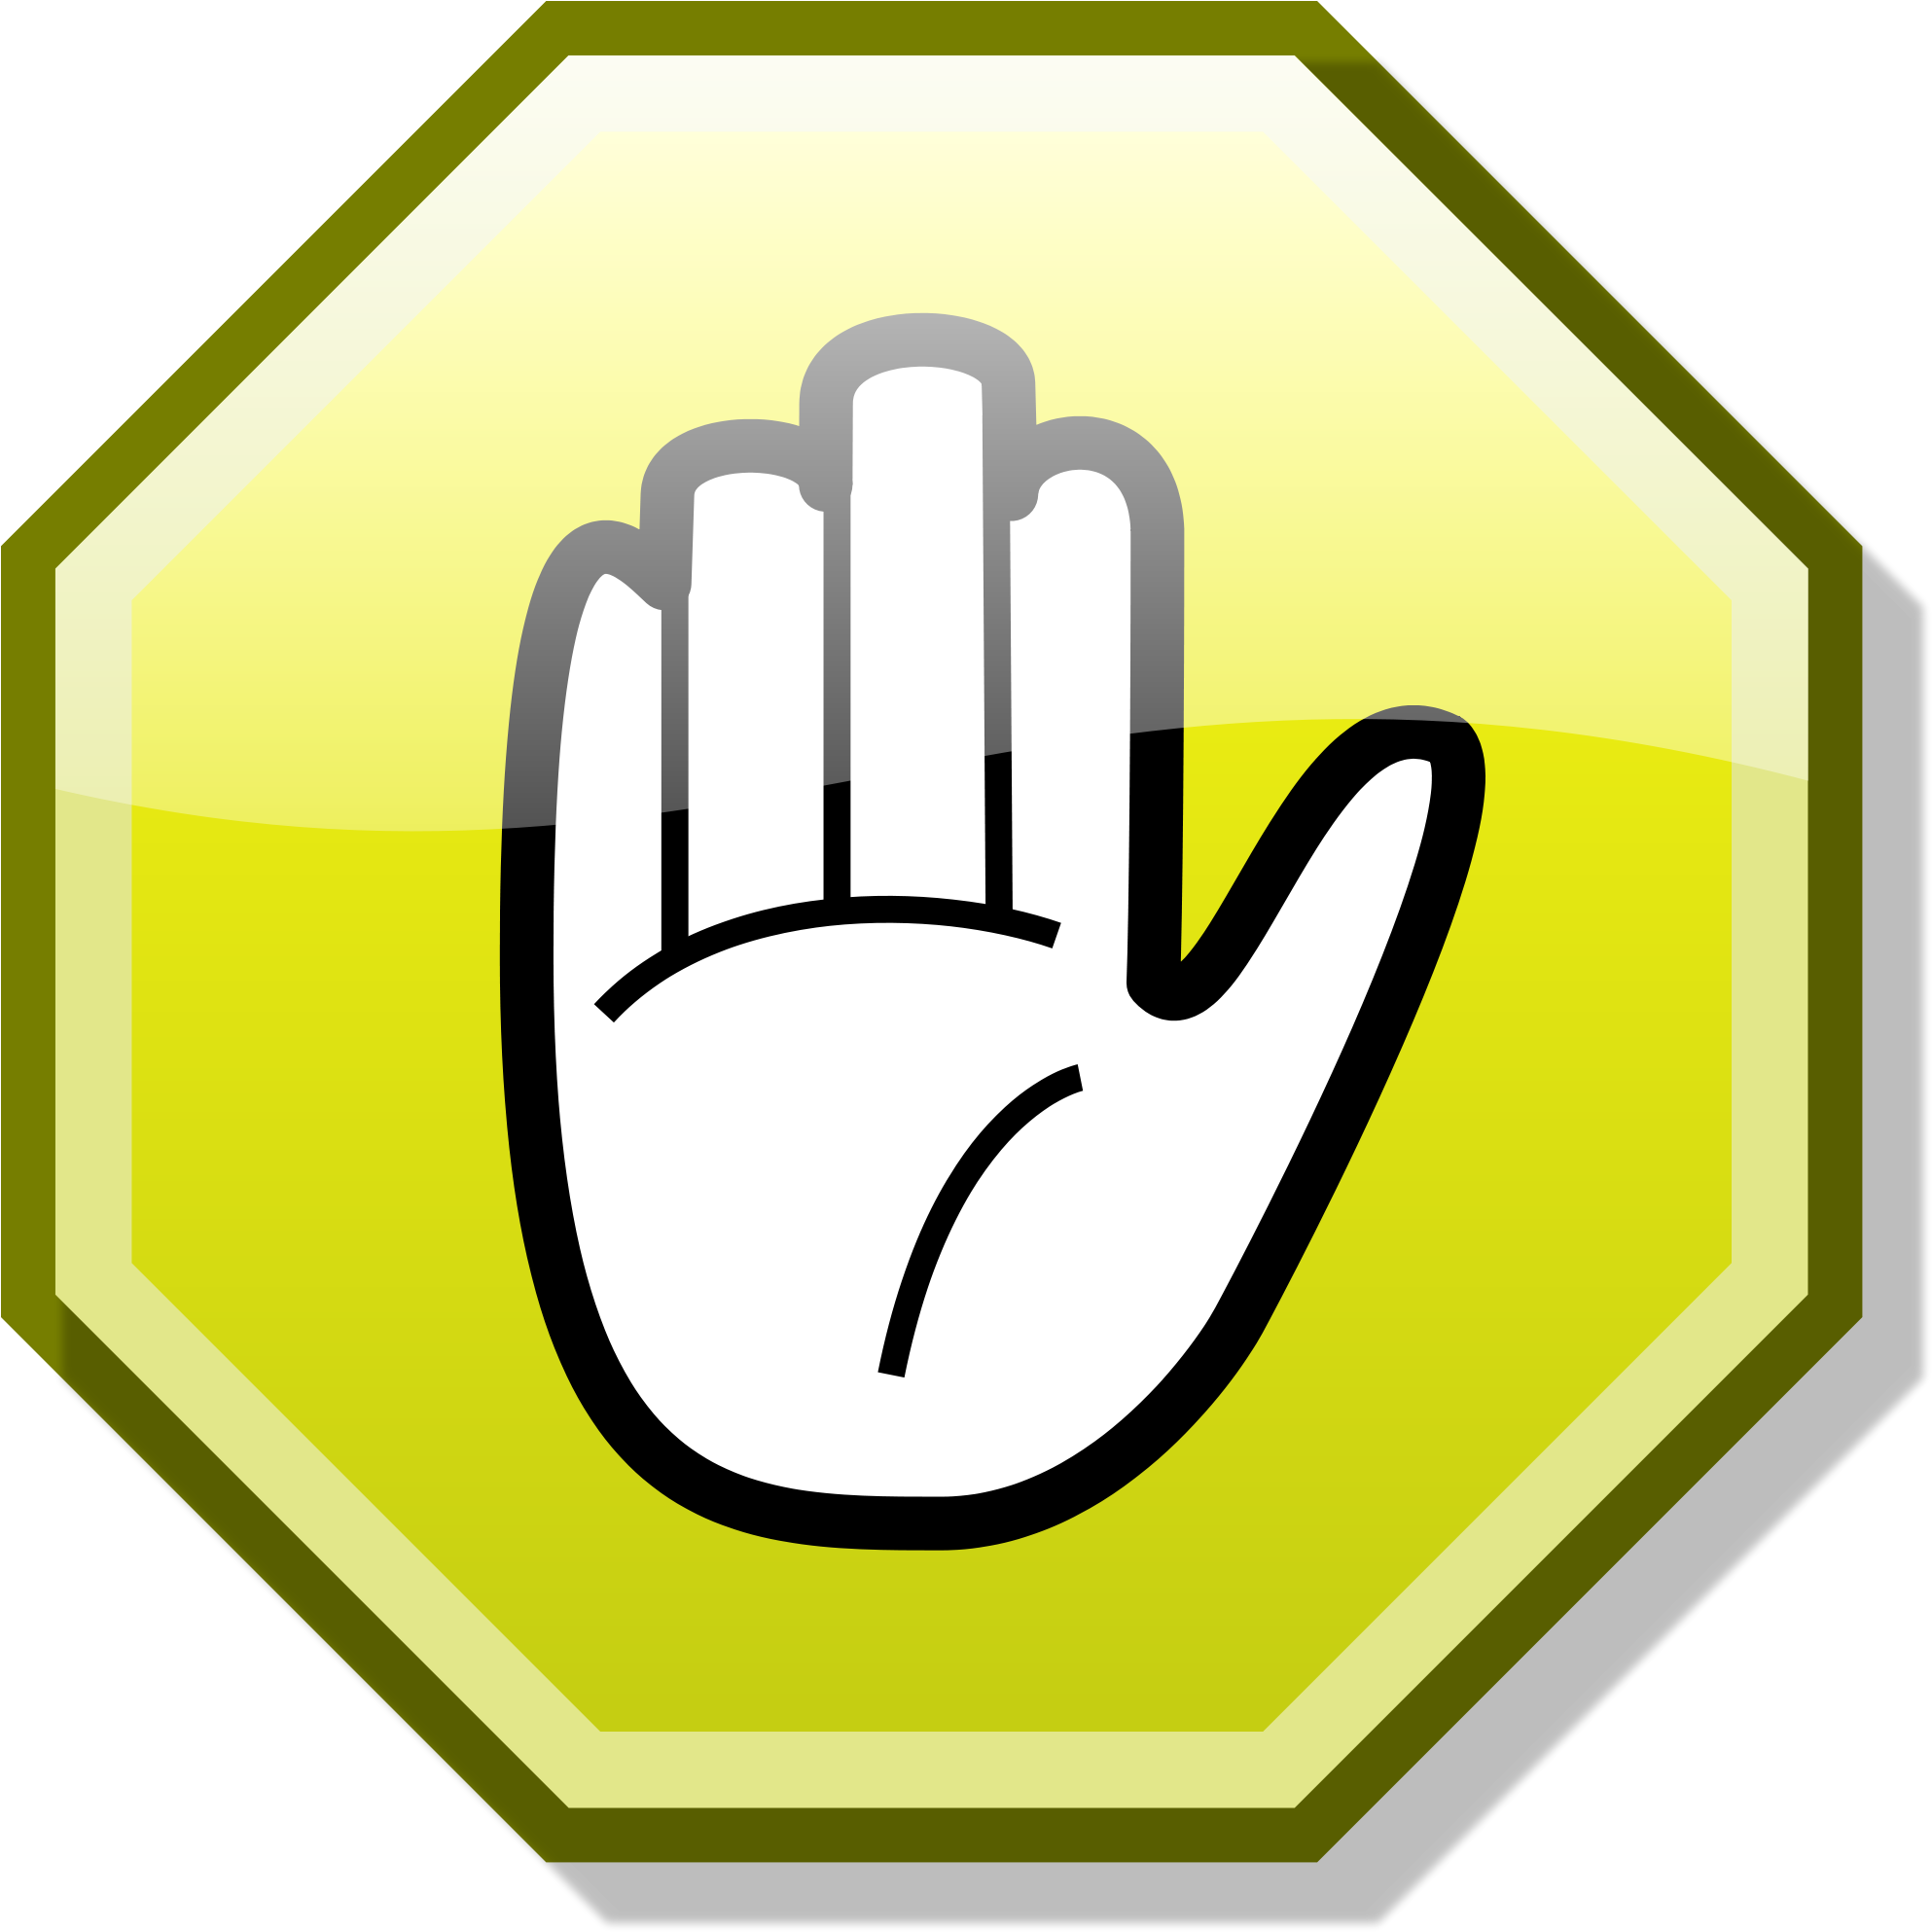 Open - Yellow Stop Hand (2000x2000)